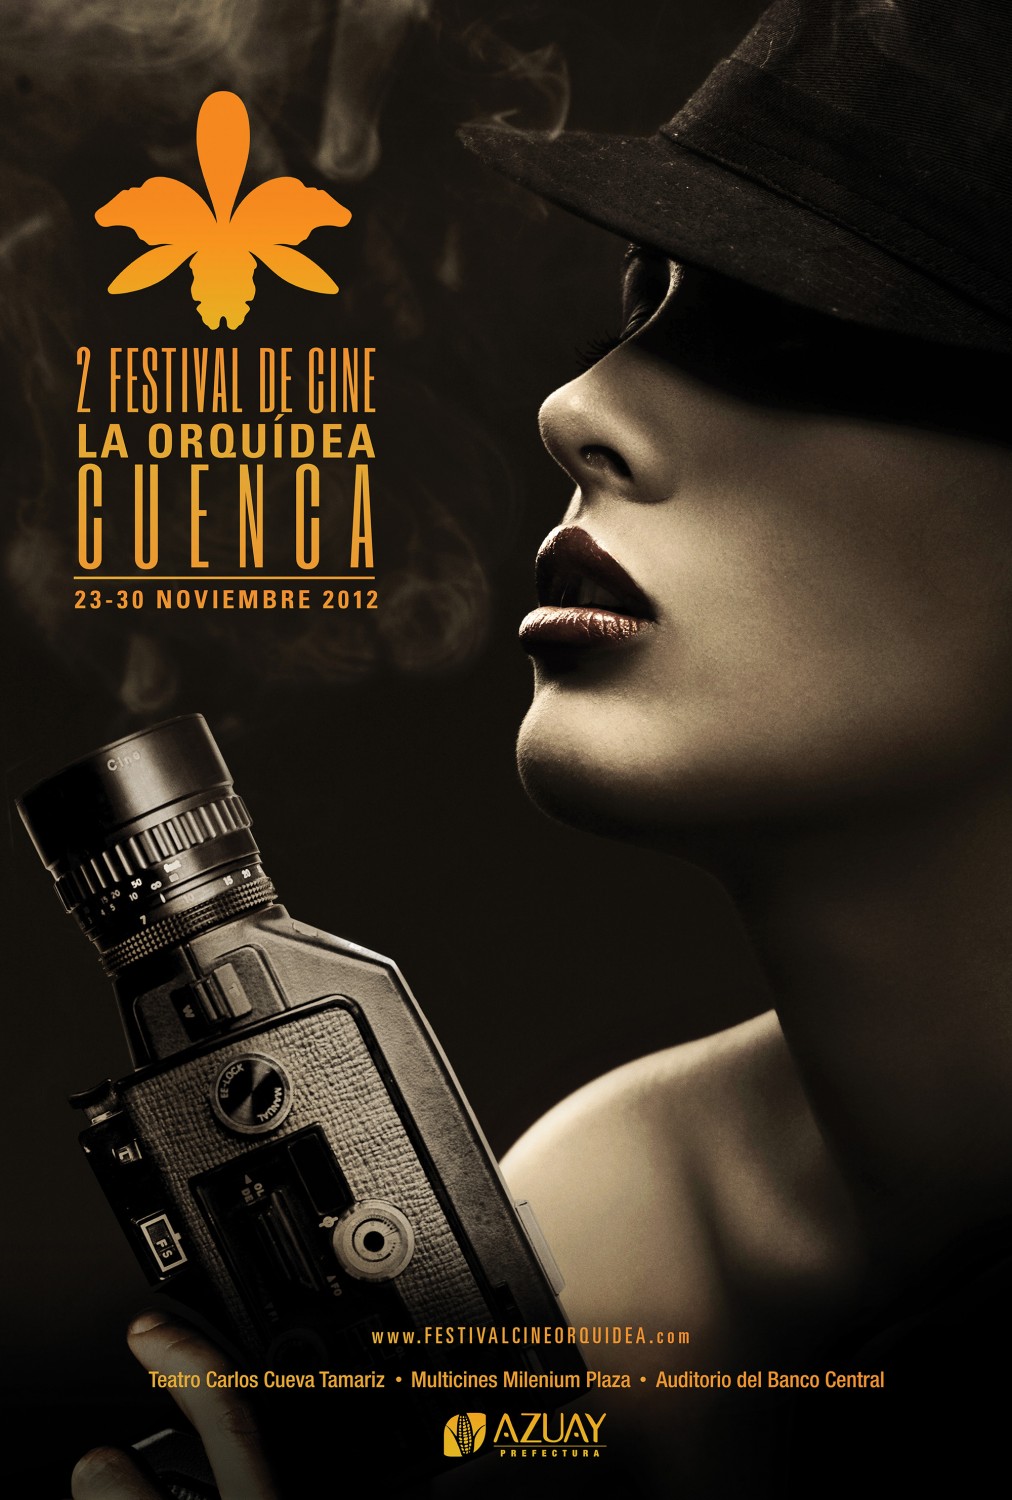 Extra Large TV Poster Image for Festival de Cine La Orquidea (#2 of 2)